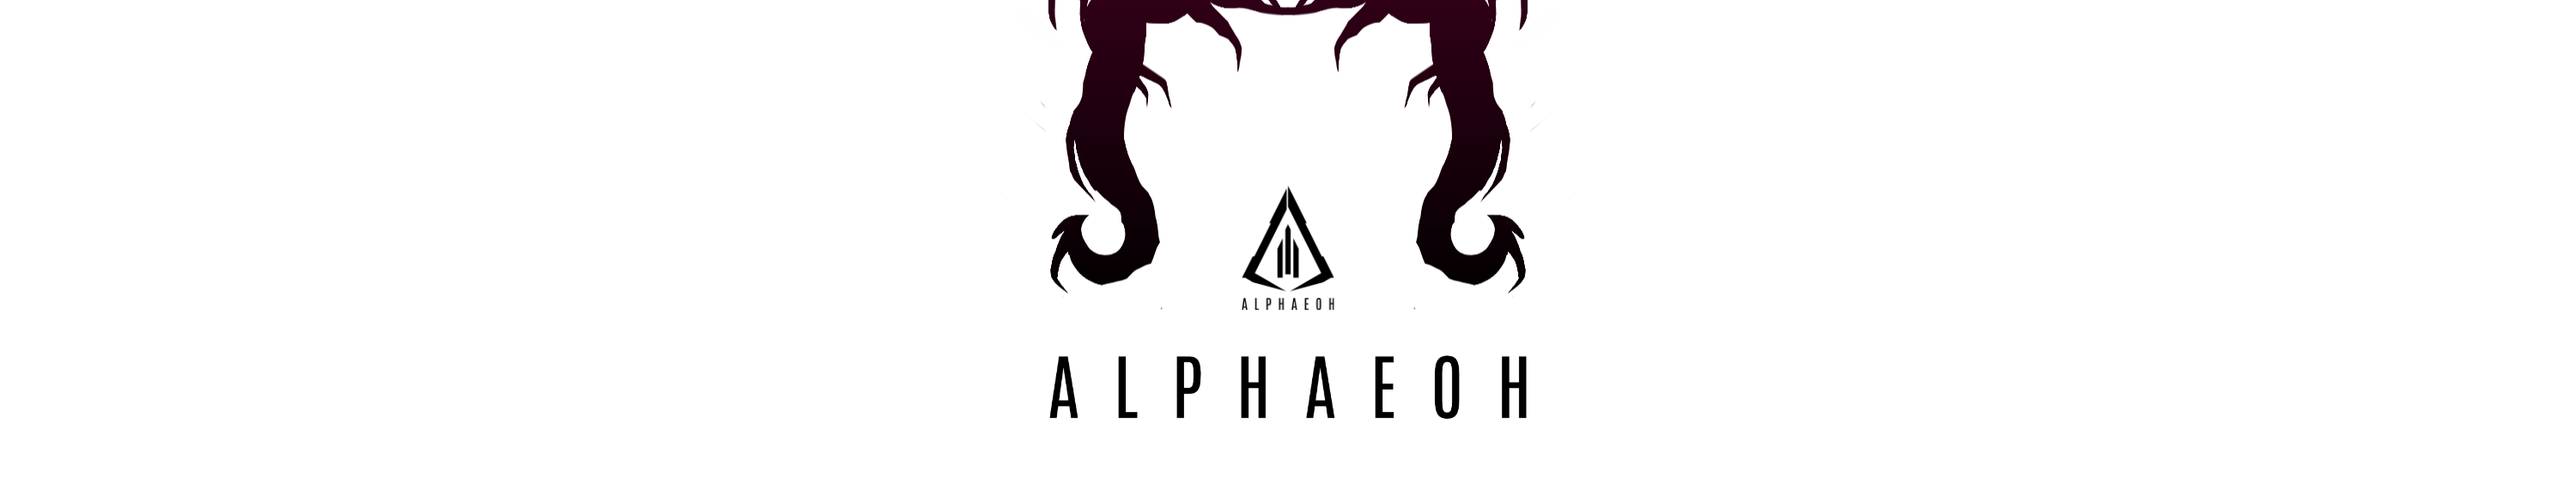 Banner profilu uživatele Alpha Eoh